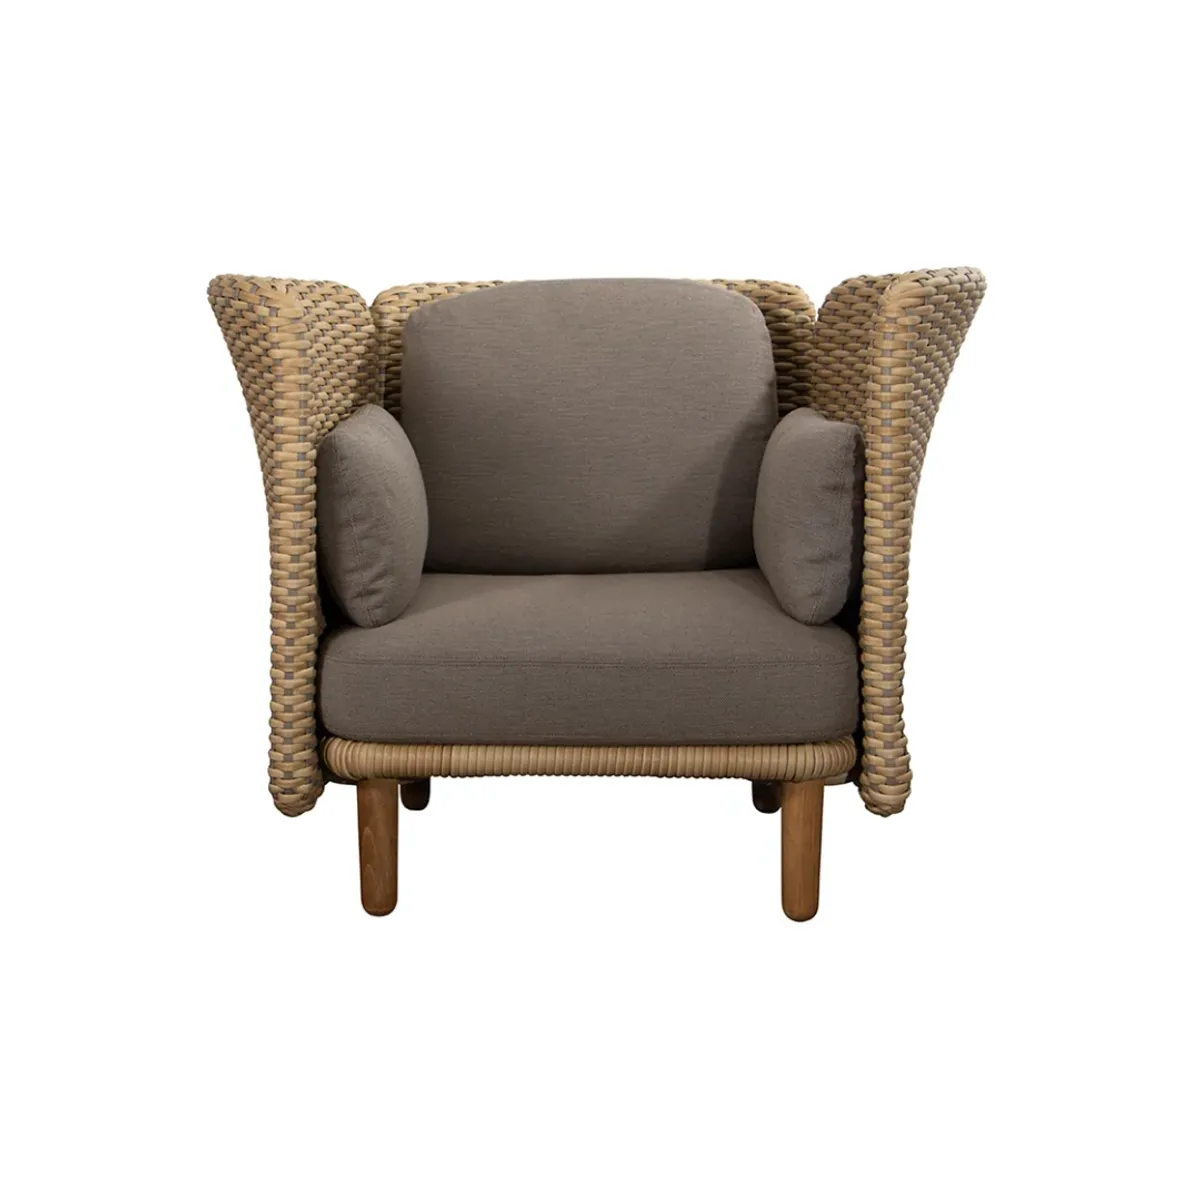 Medora lounge chair 2